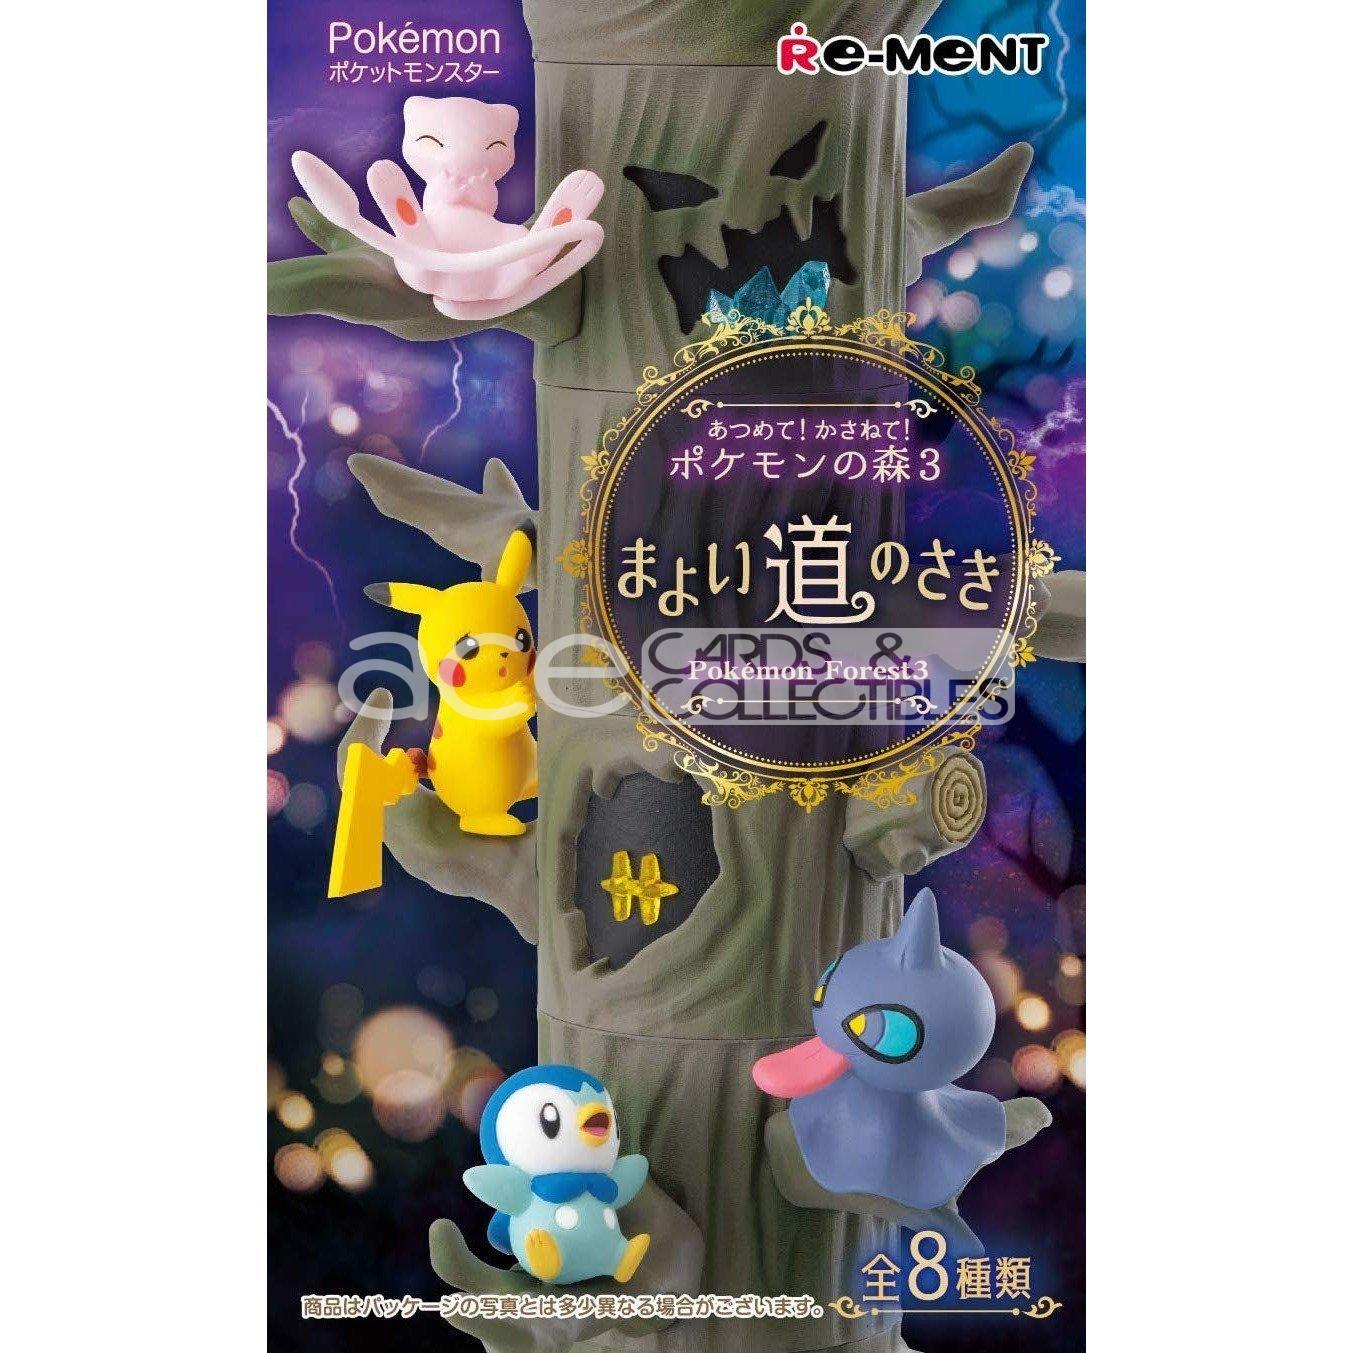 Re-Ment Pokémon Forest 3 -Beyond The Lost Path-Single Box (Random)-Re-Ment-Ace Cards & Collectibles